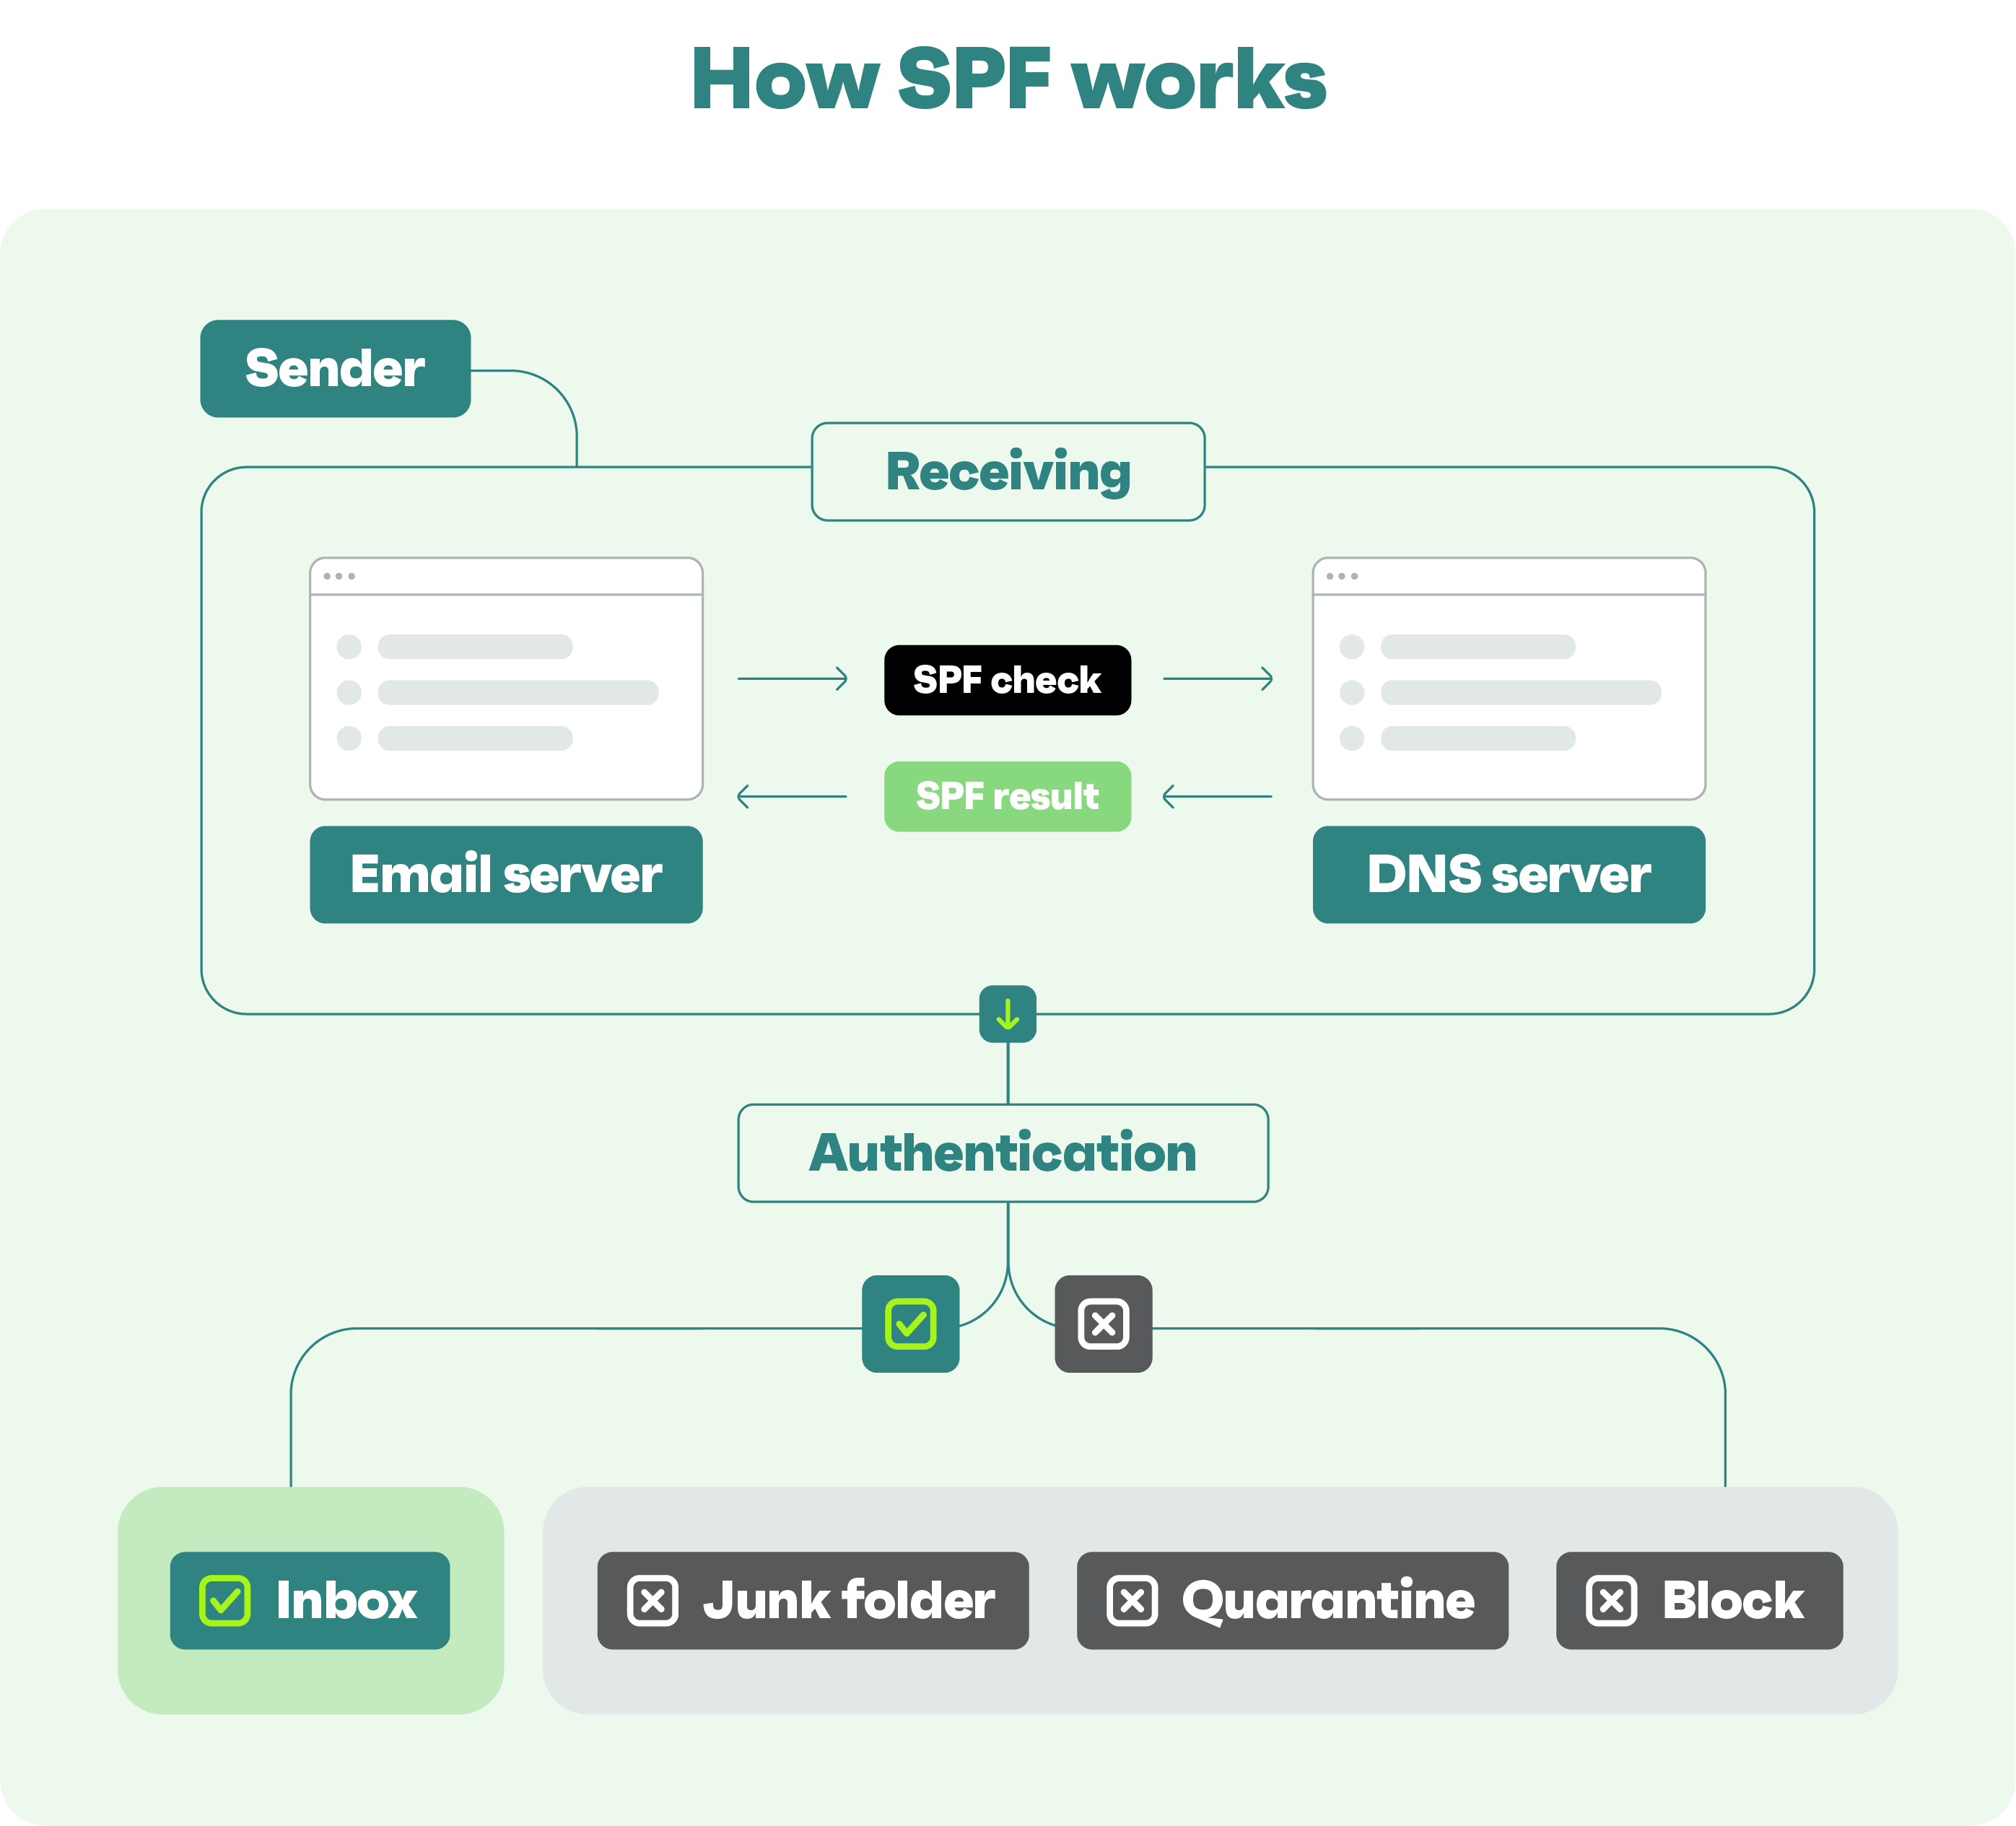 image explaining how SPF works